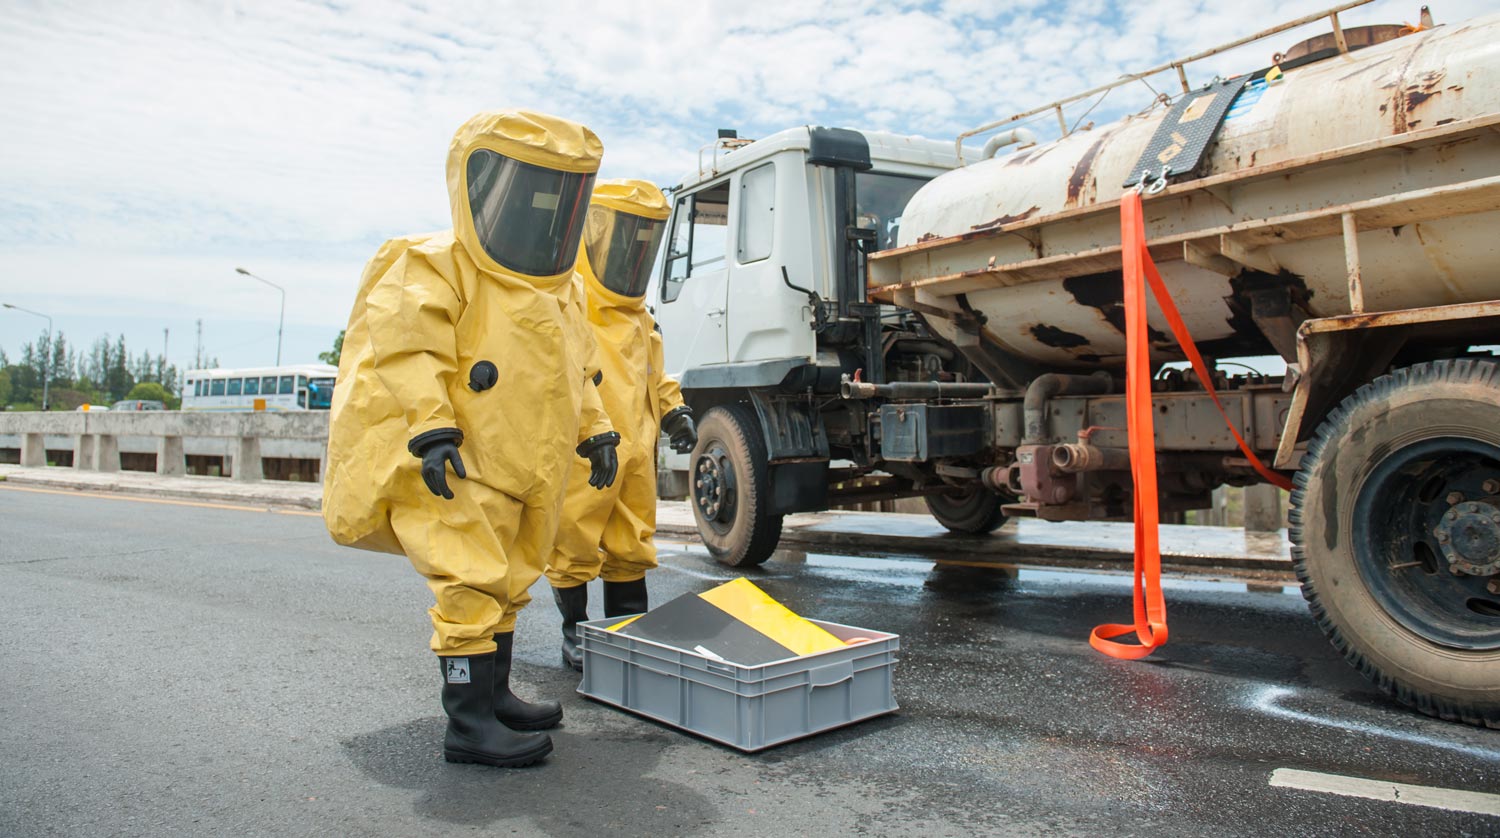 Hazardous Waste chemical disposal in Palo Alto California